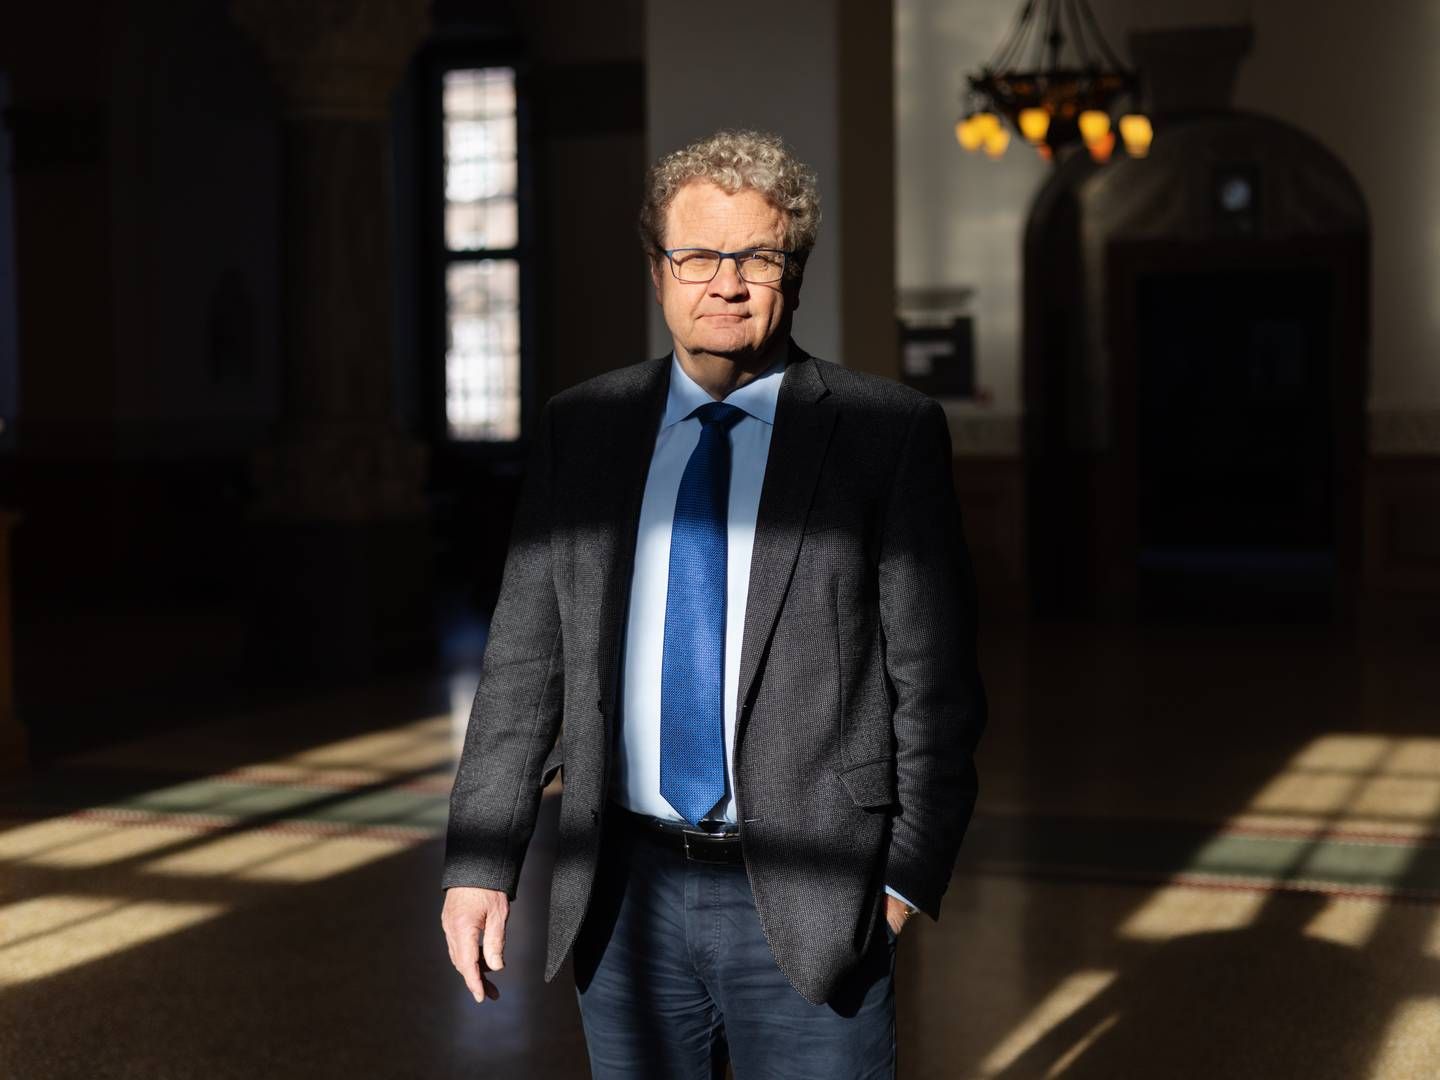 Venstres retsordfører Preben Bang Henriksen er ubestridt kammeradvokatordningens største modstander på Christiansborg. | Photo: Gregers Tycho